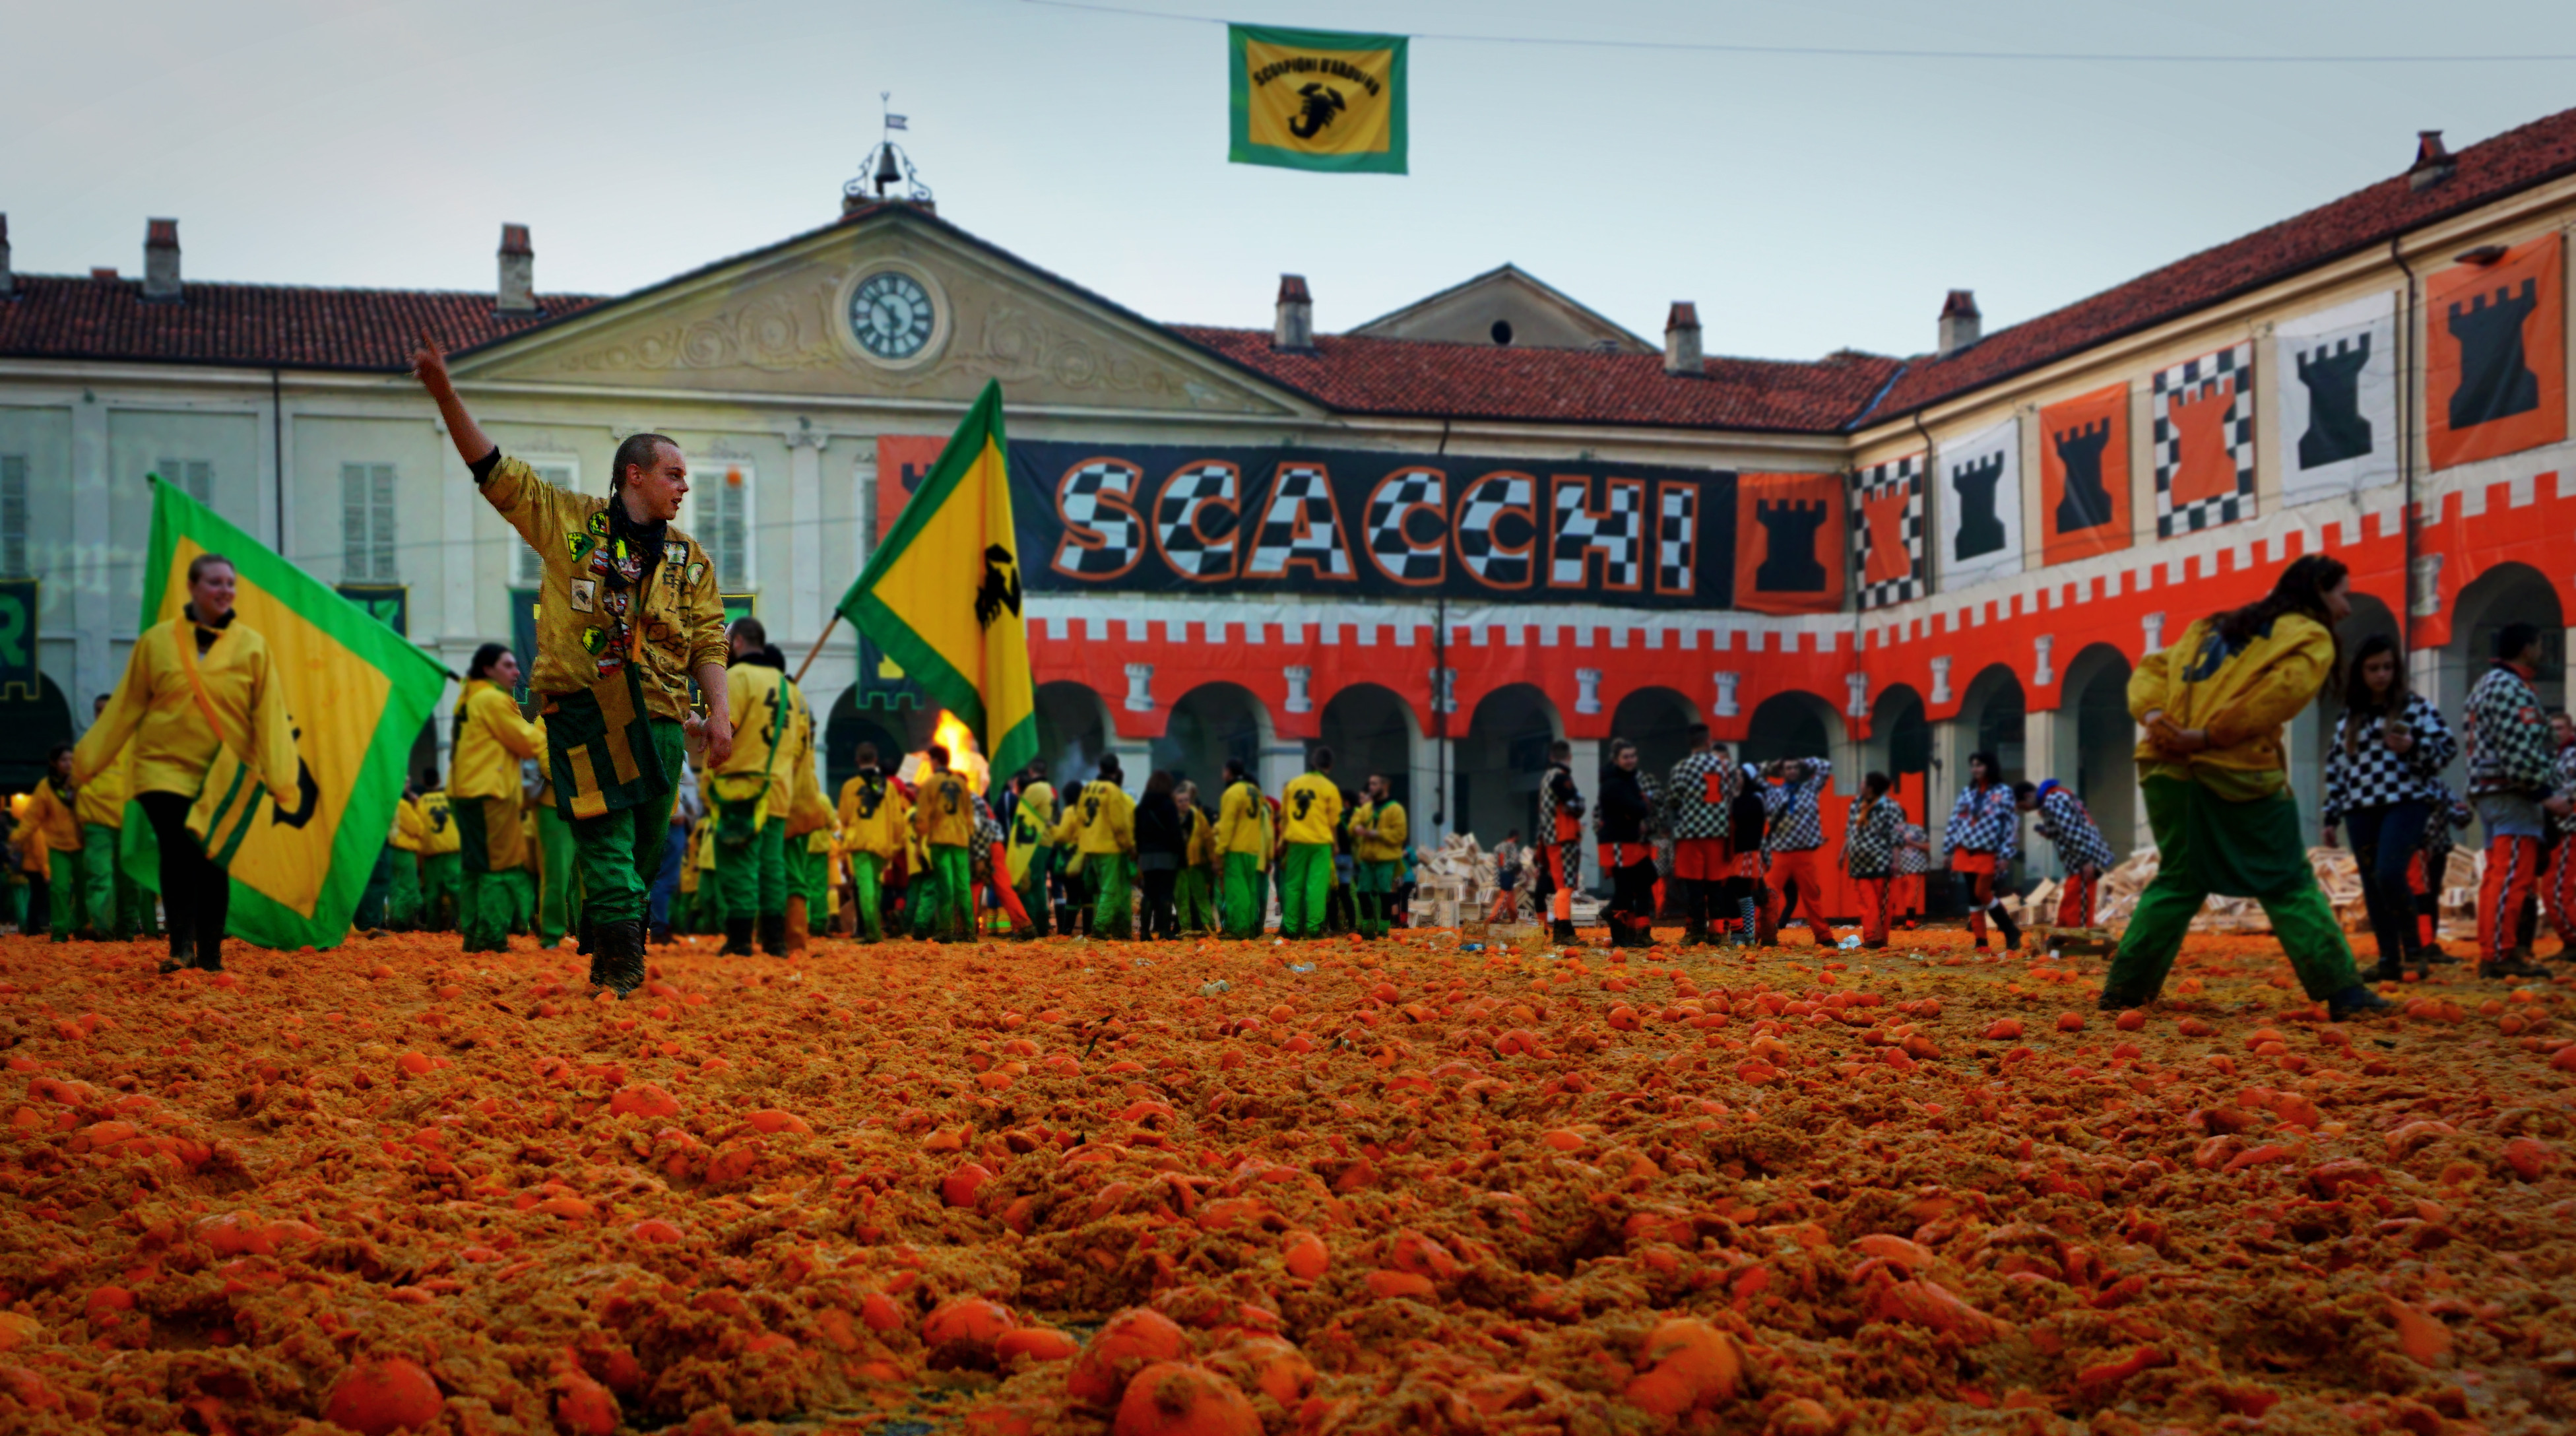 Ben Guerra-LC-Carnival in Ivrea, The Battle of the Oranges